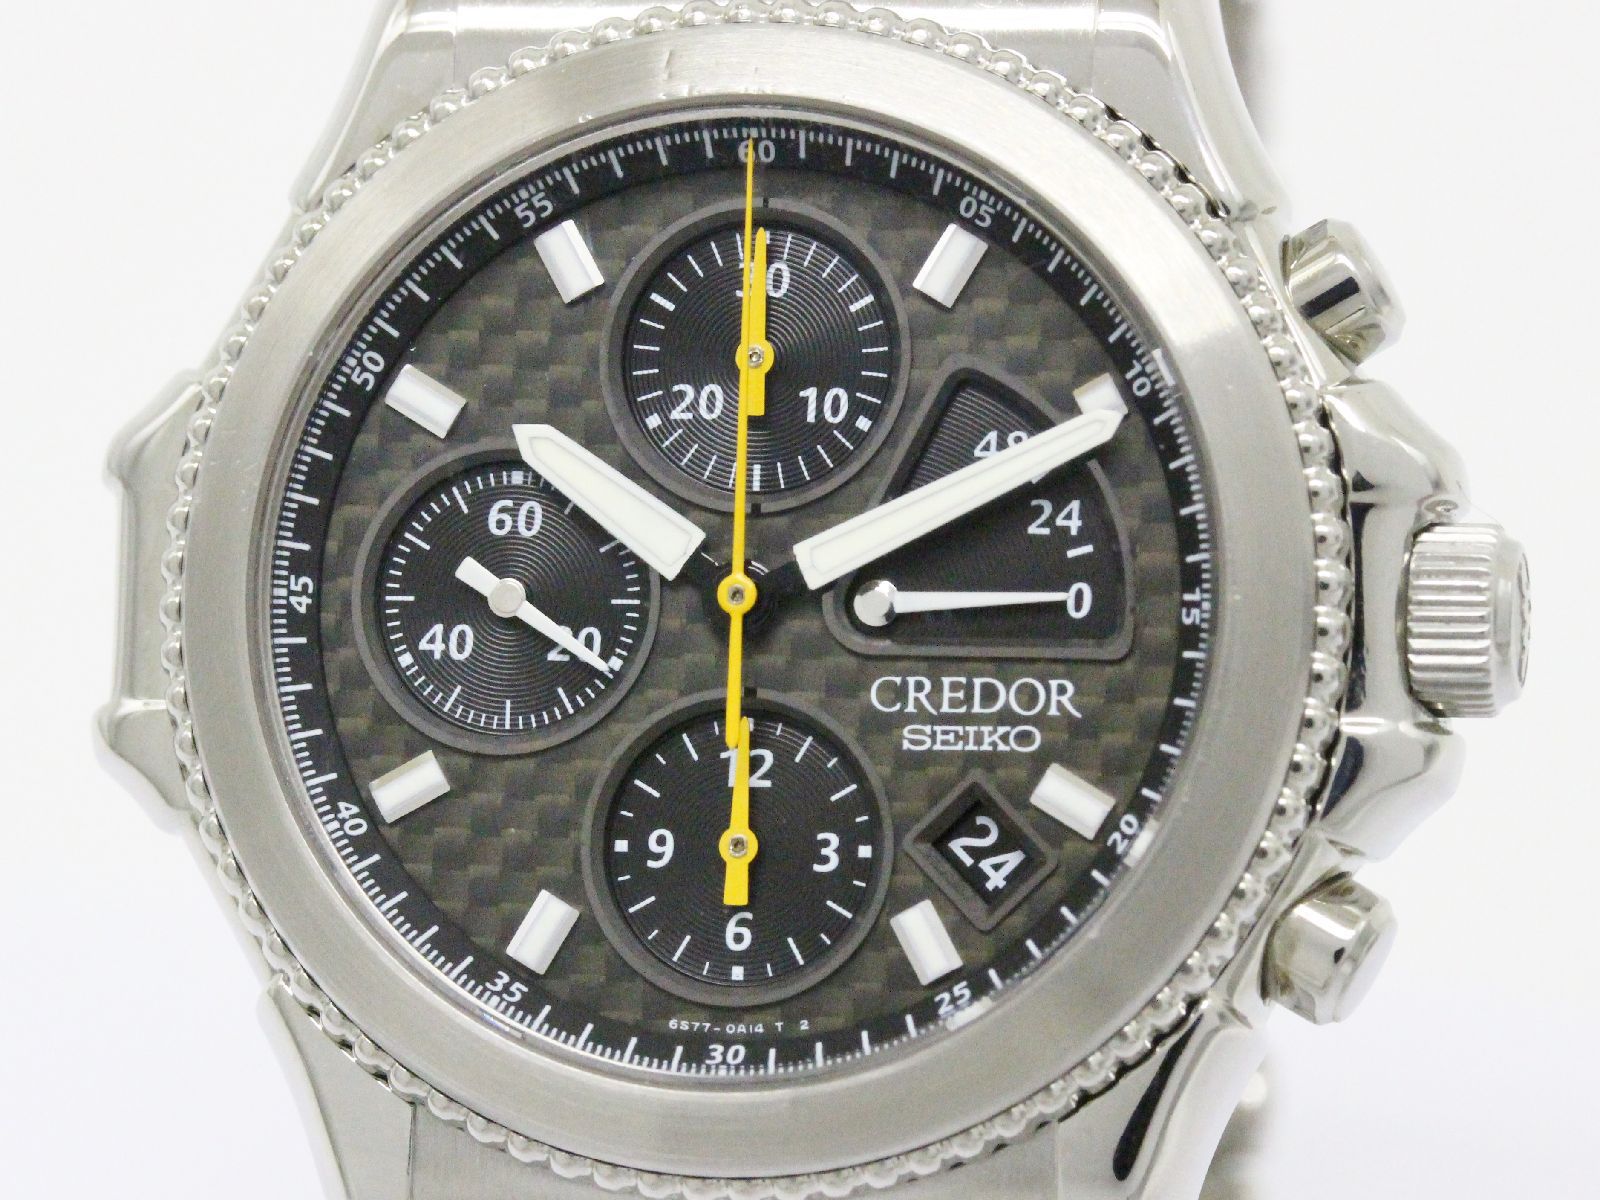 SEIKOクレドール腕時計の買取相場と高価買取3つのコツ - 買取一括比較のウリドキ